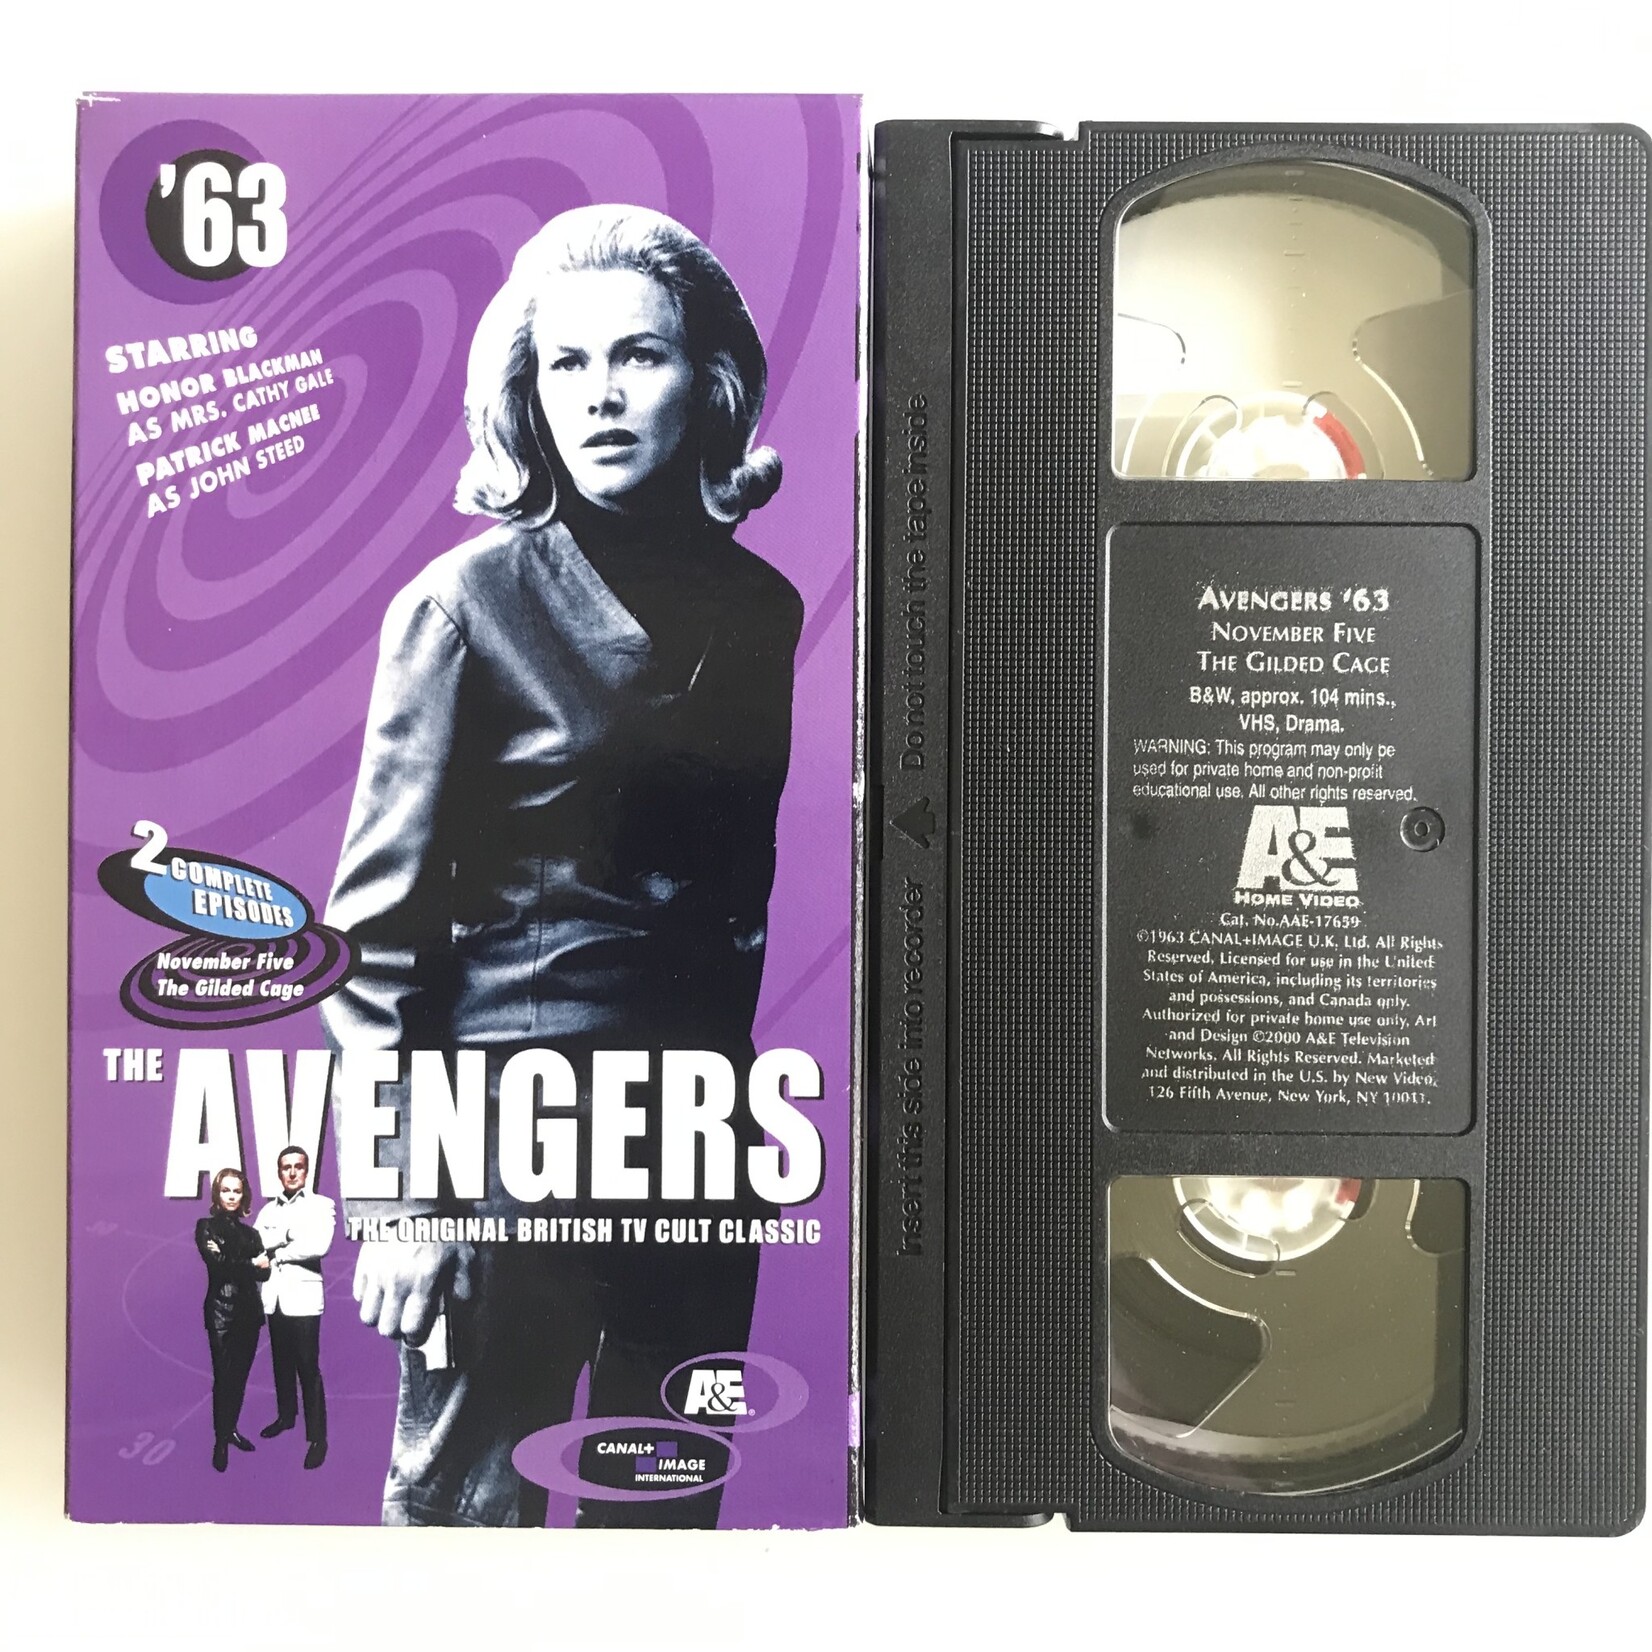 Avengers ‘63: Volume 3 - November Five / The Gilded Cage - VHS